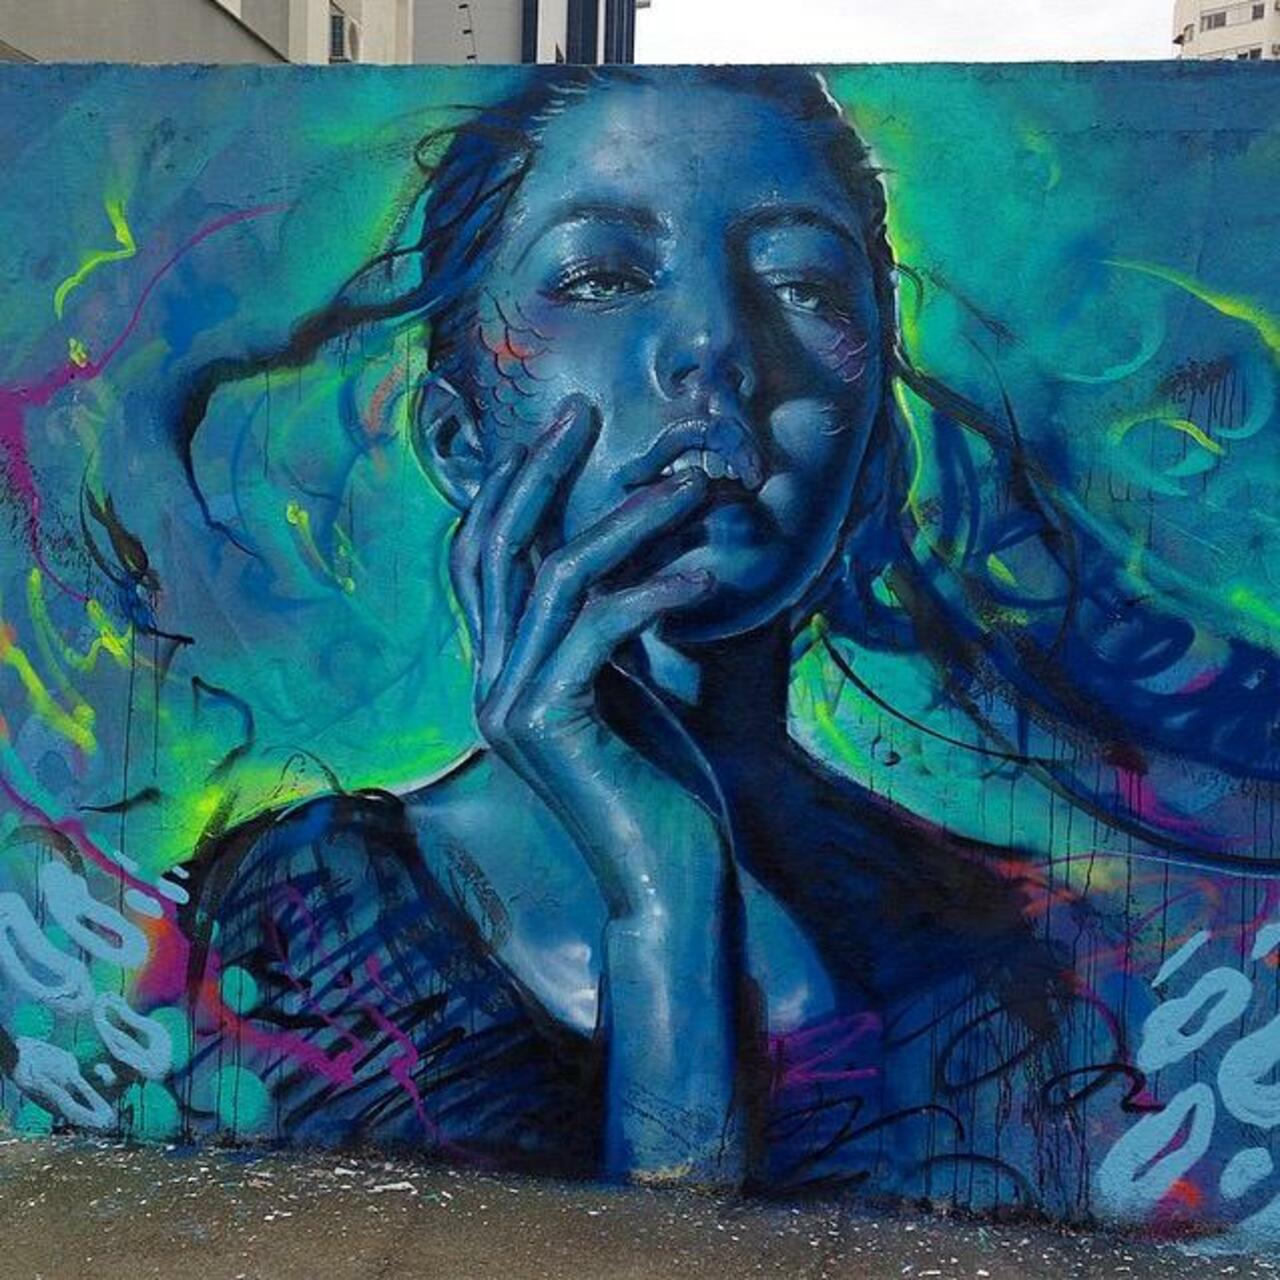 Thiago Valdi new Street Art piece titled 'Day Dreamer' #art #mural #graffiti #streetart http://t.co/3UodbQm48I …… http://twitter.com/GoogleStreetArt/status/652604458048876544/photo/1/large?utm_source=fb&utm_medium=fb&utm_campaign=charlesjackso14&utm_content=652732441849954304